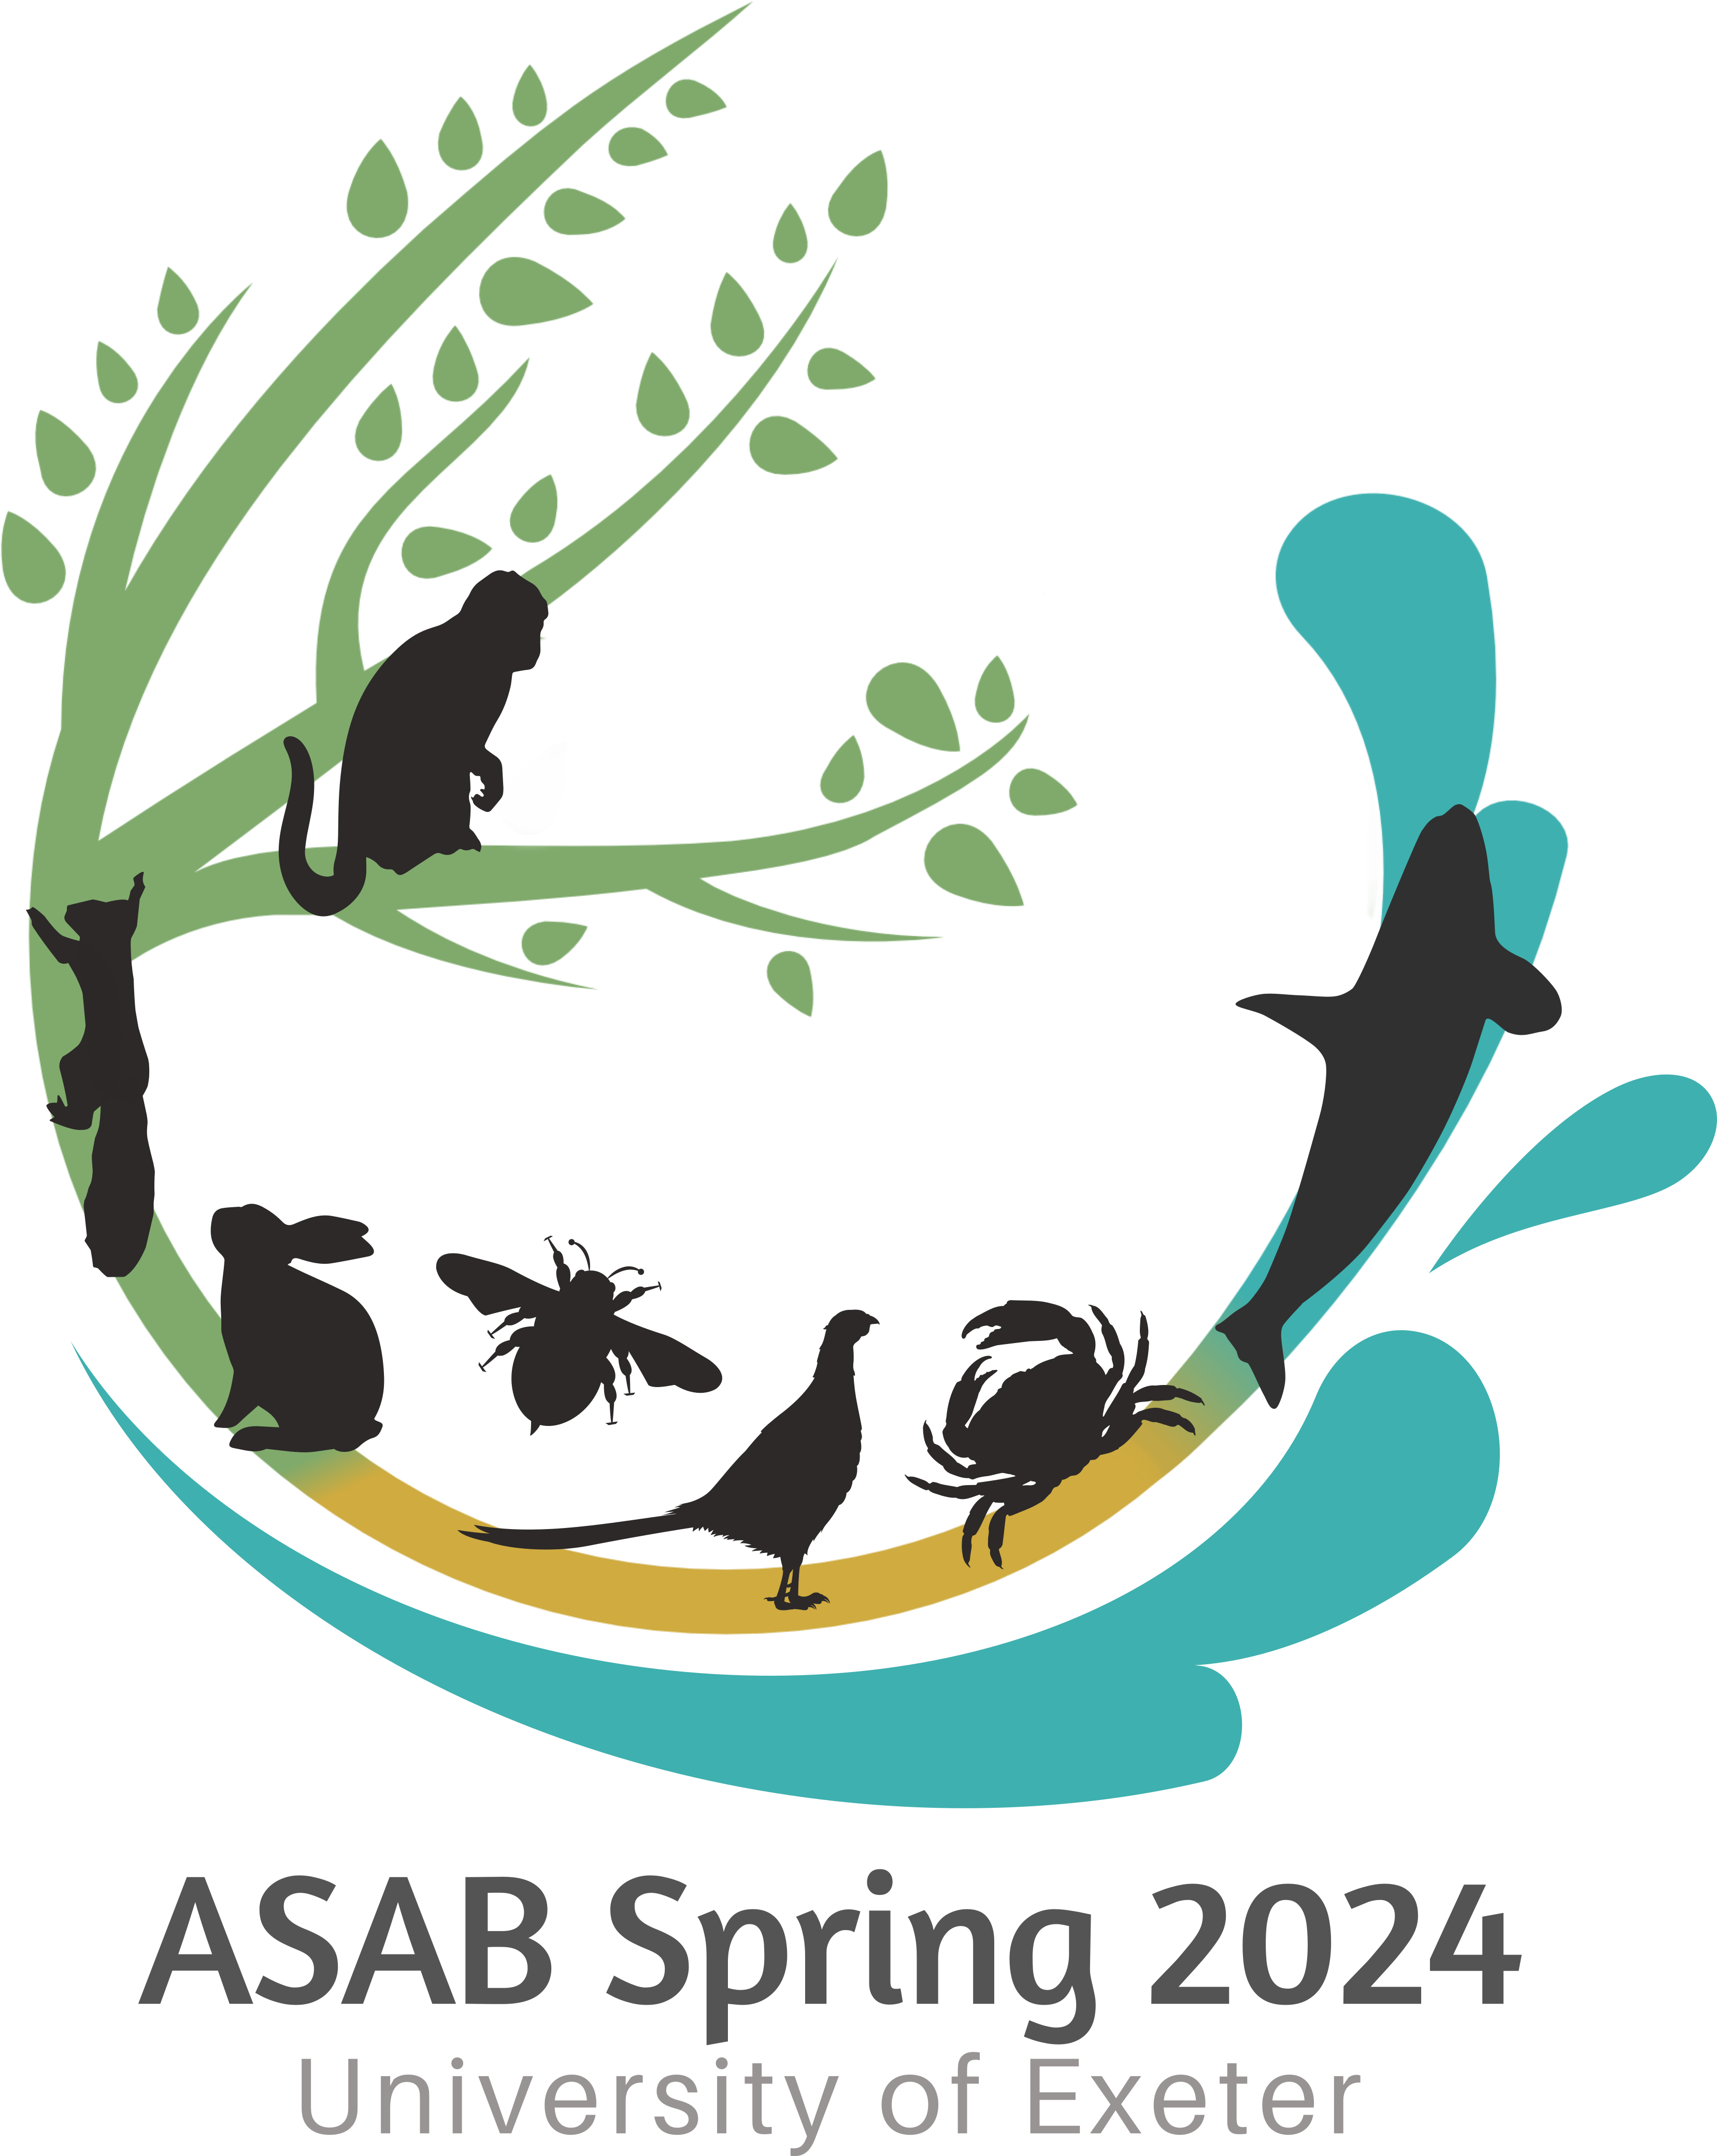 ASAB Spring 2024 logo